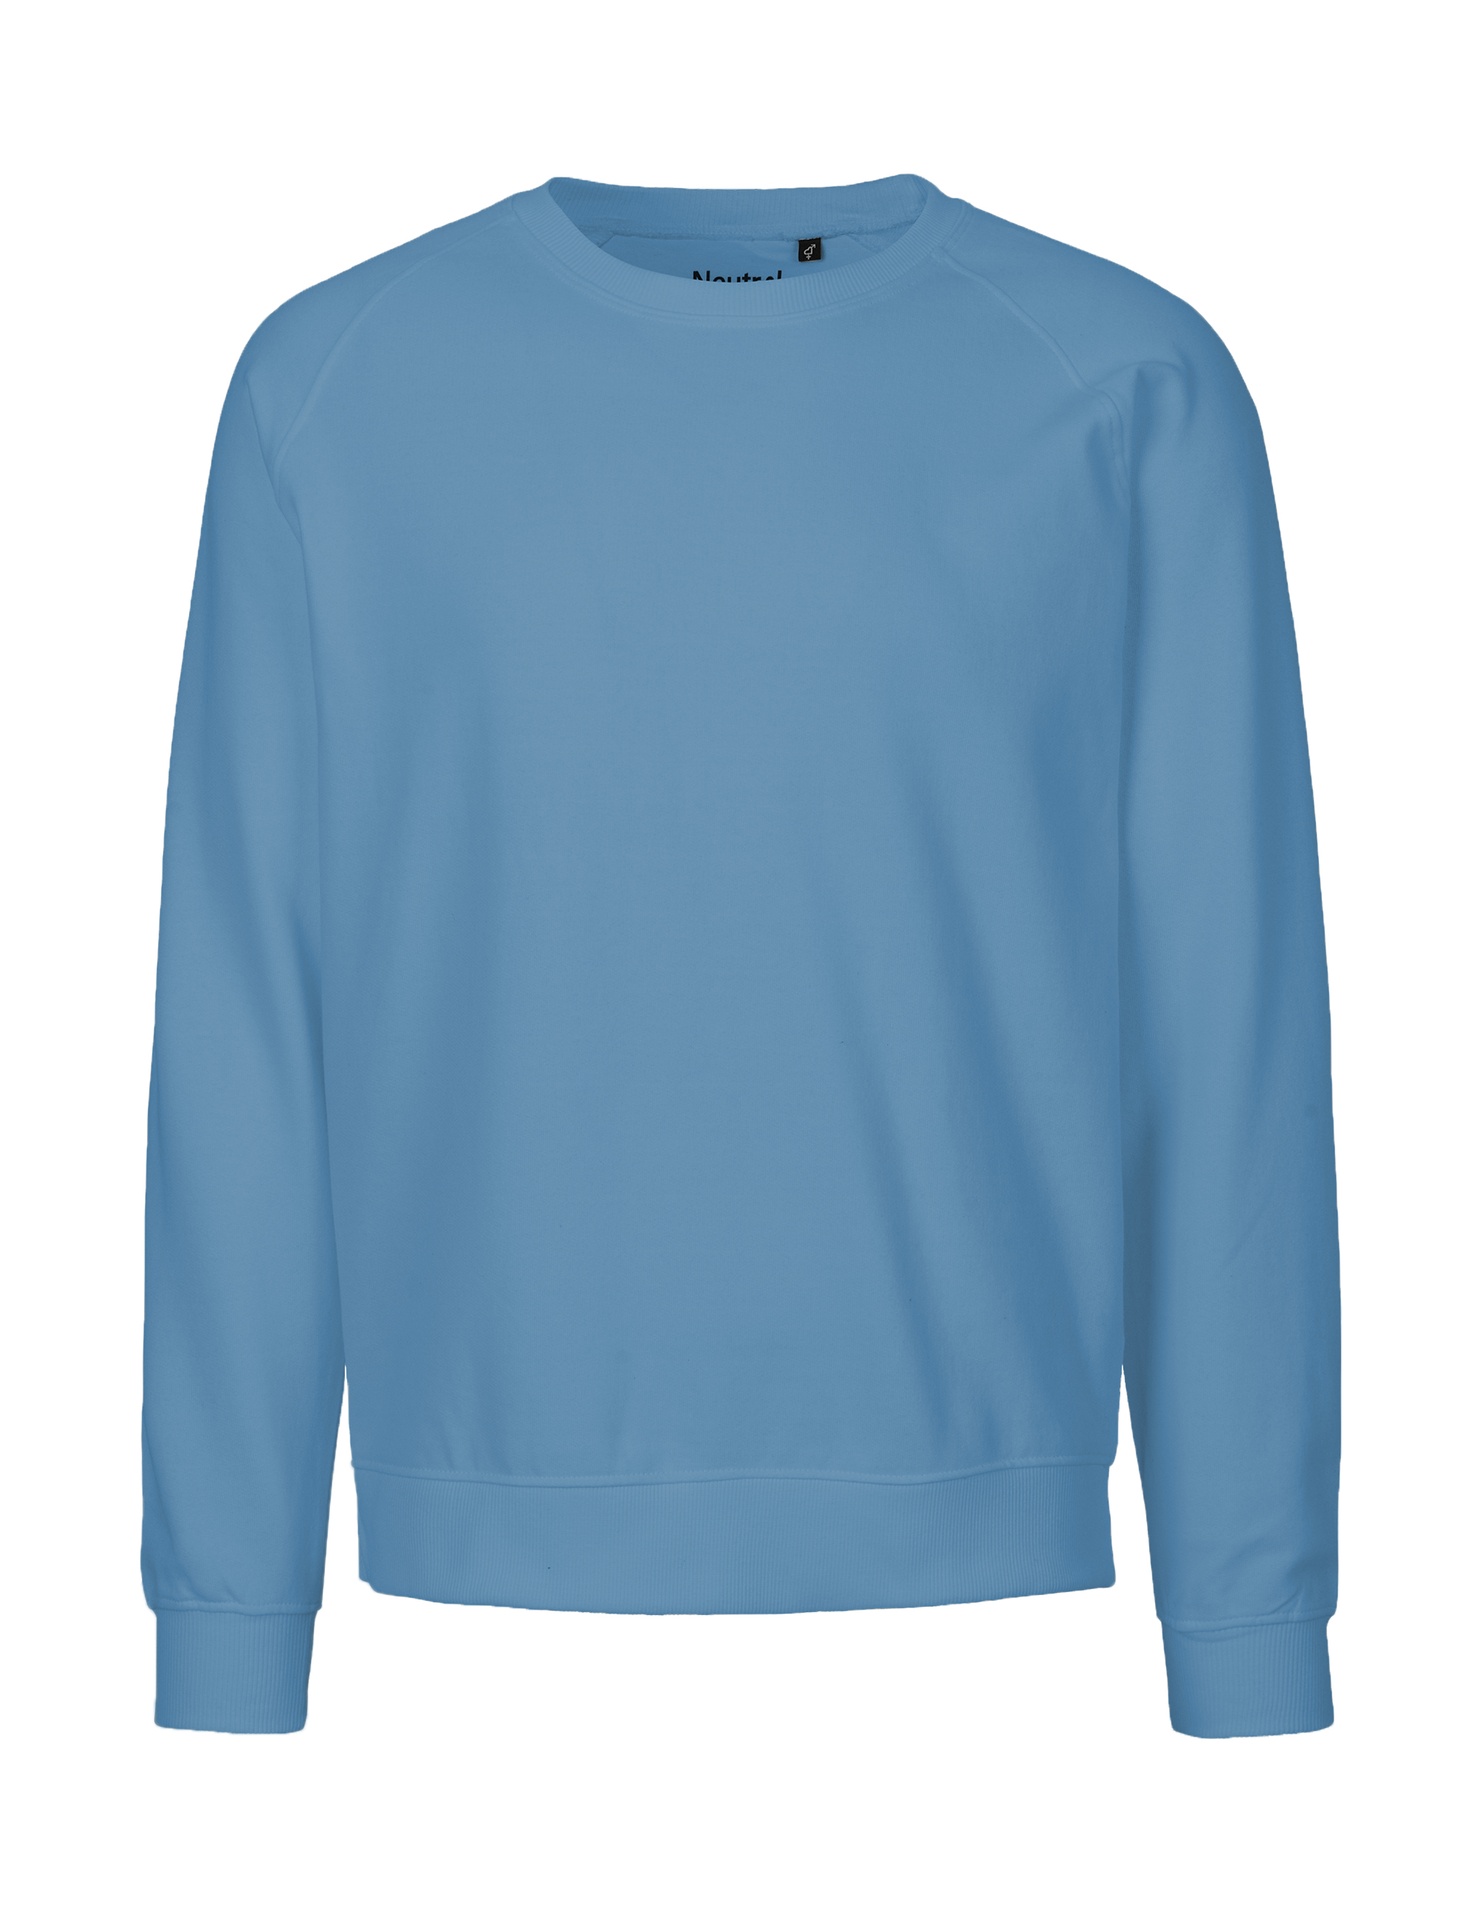 [PR/02837] Unisex Sweatshirt (Dusty Indigo 41, 2XL)